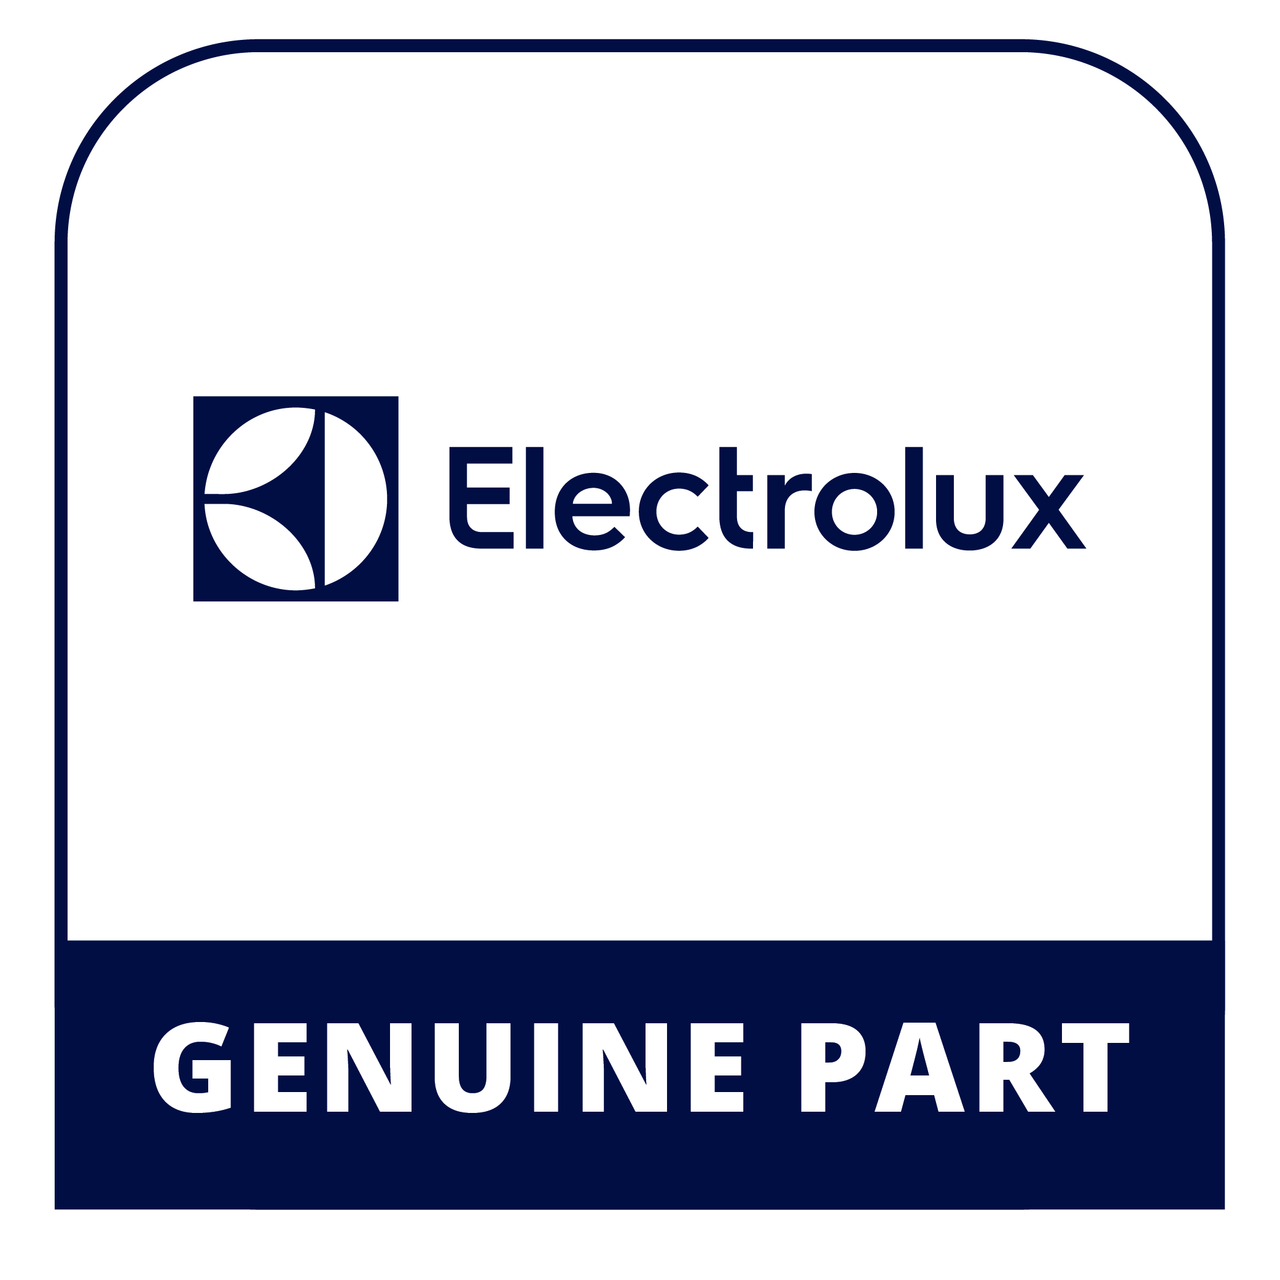 Frigidaire - Electrolux 5304504833 Retainer - Genuine Electrolux Part